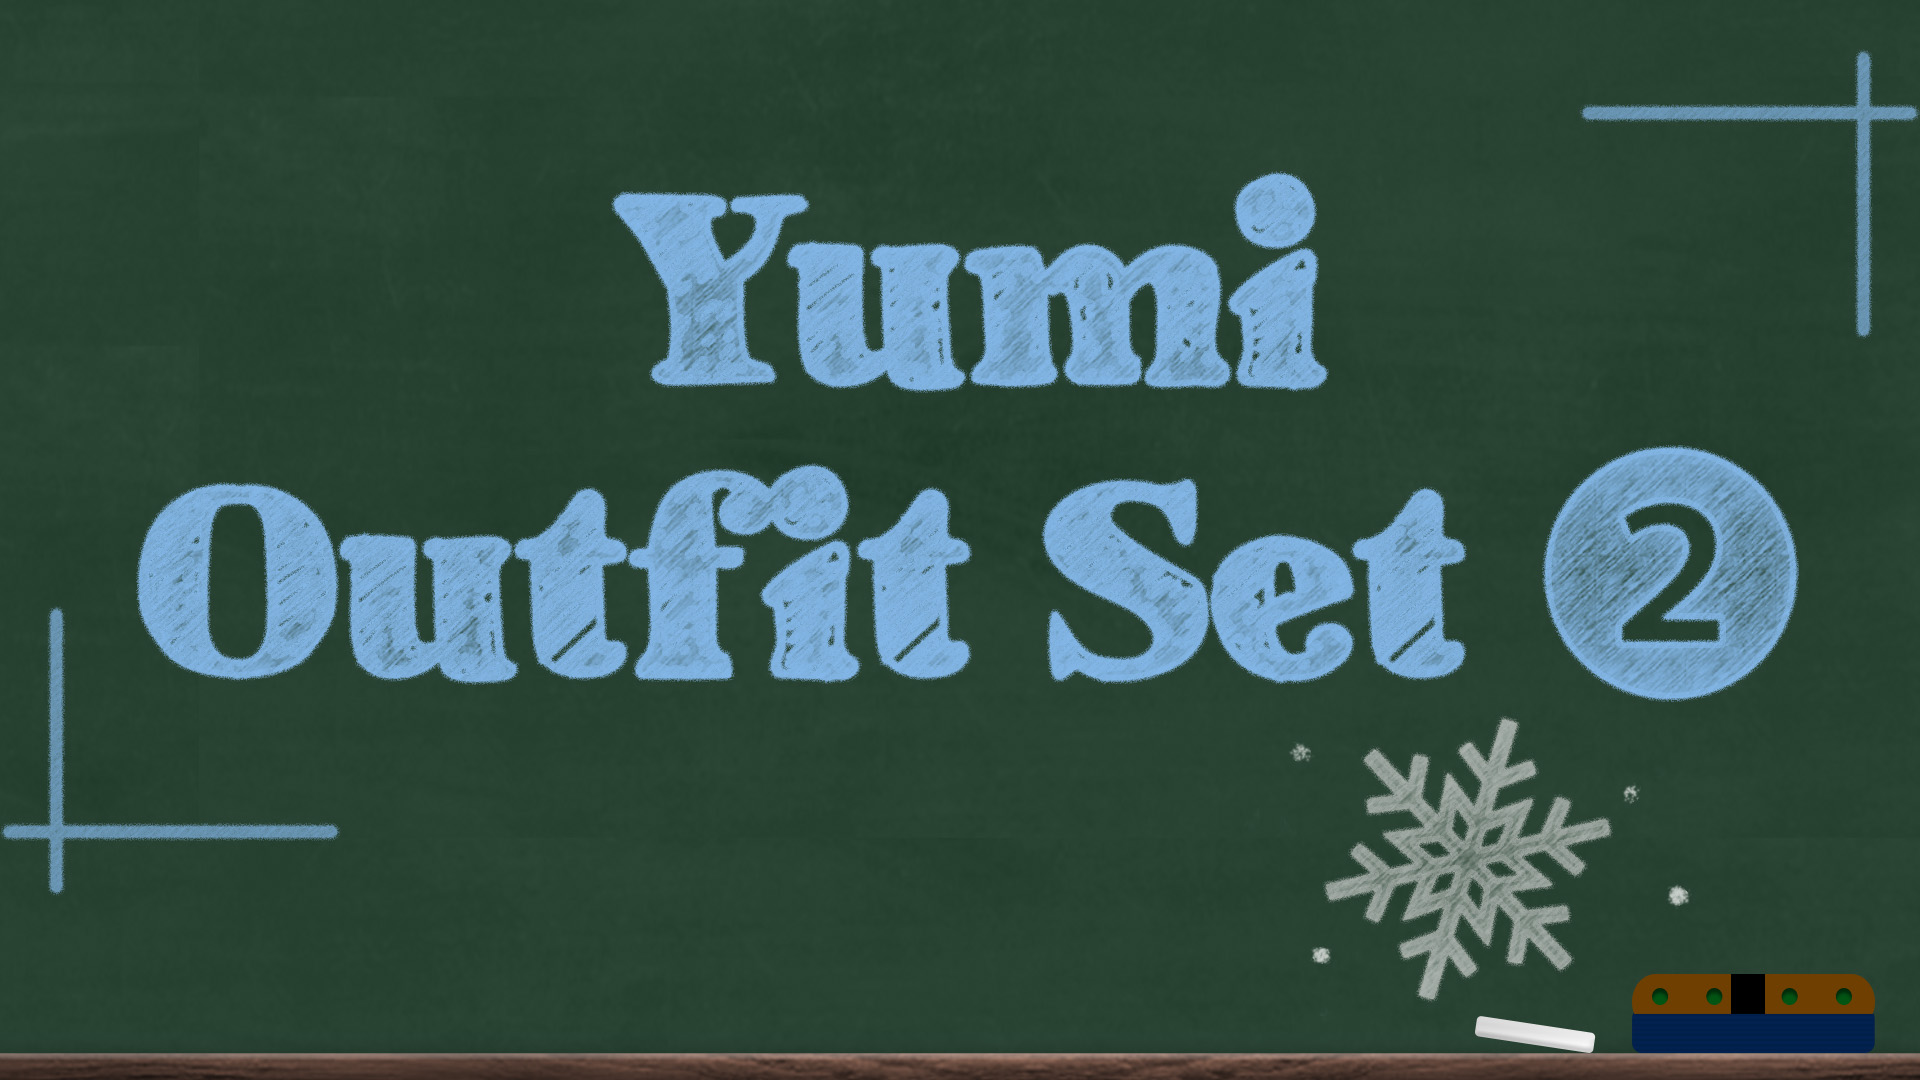 SENRAN KAGURA Reflexions - Yumi Reflexions Course & 9-Outfit Set on Steam